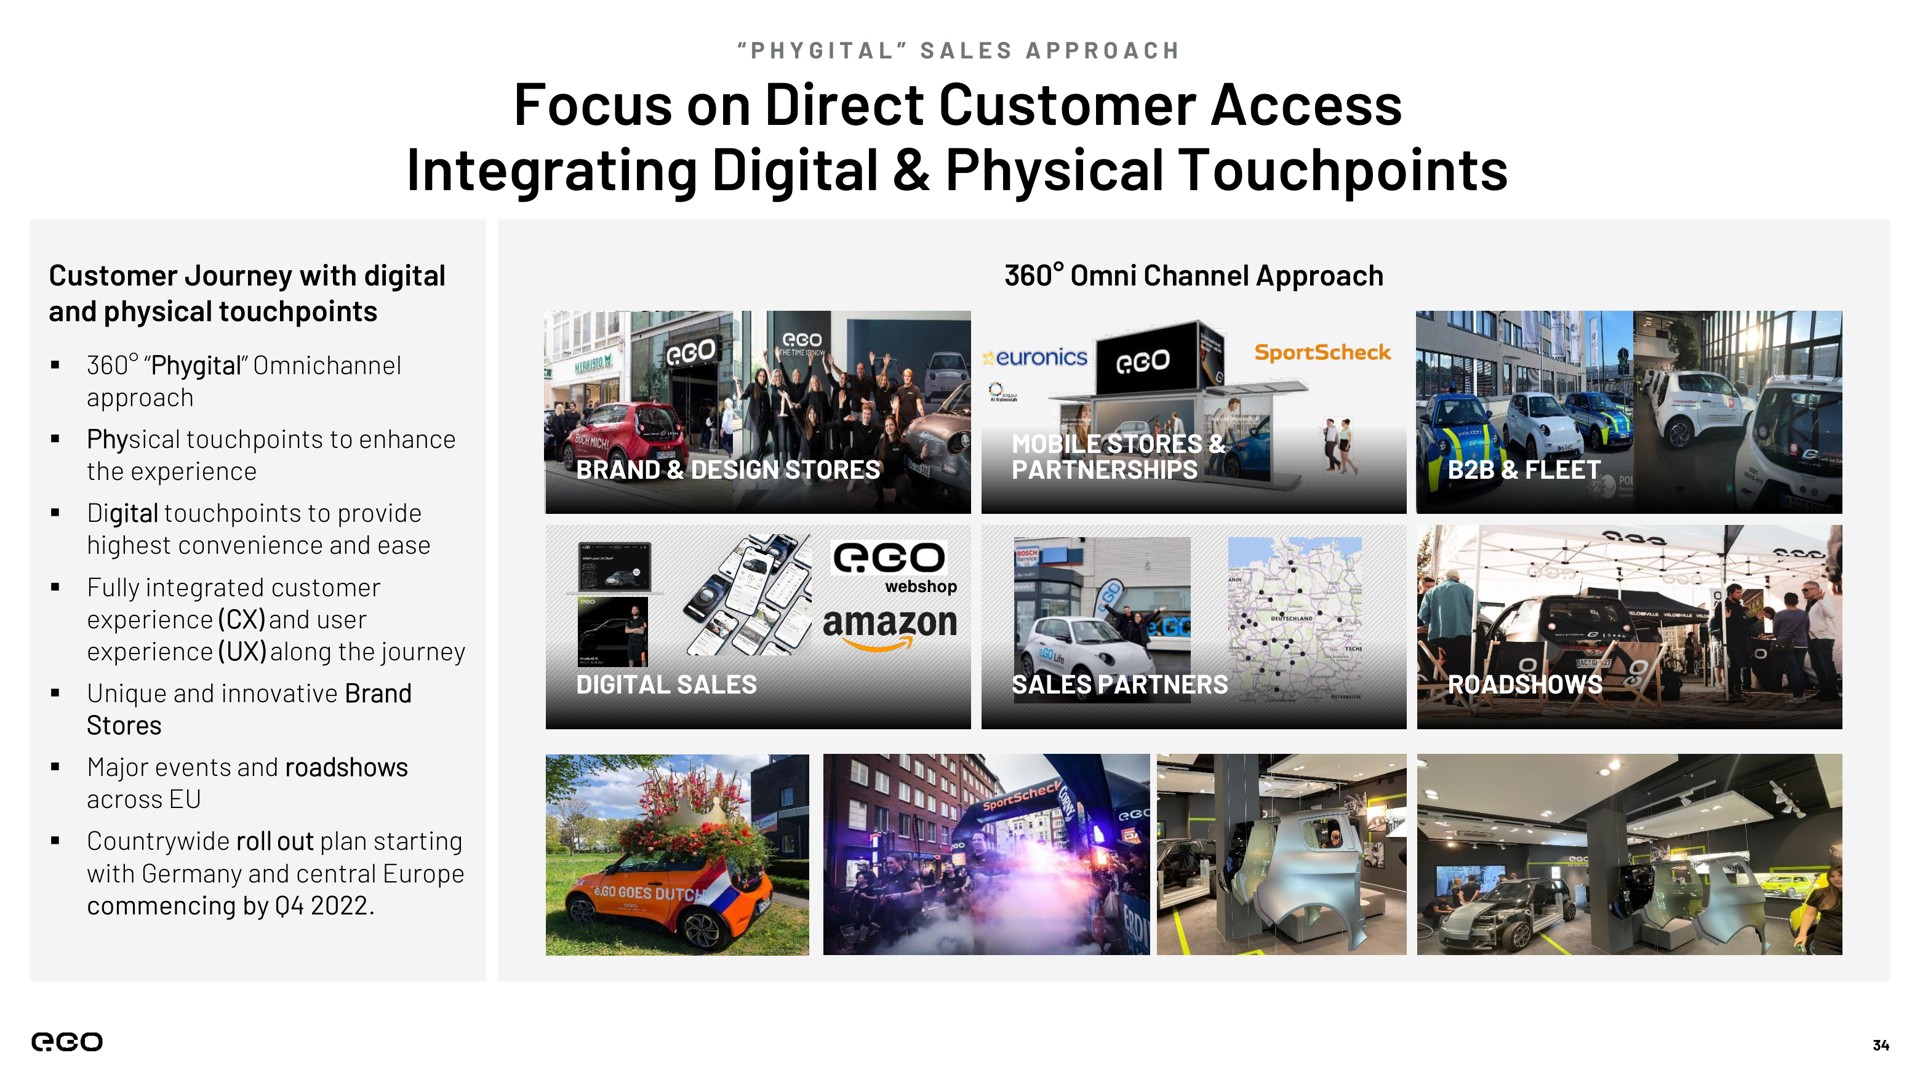 focus on direct customer access integrating digital physical | Next.e.GO